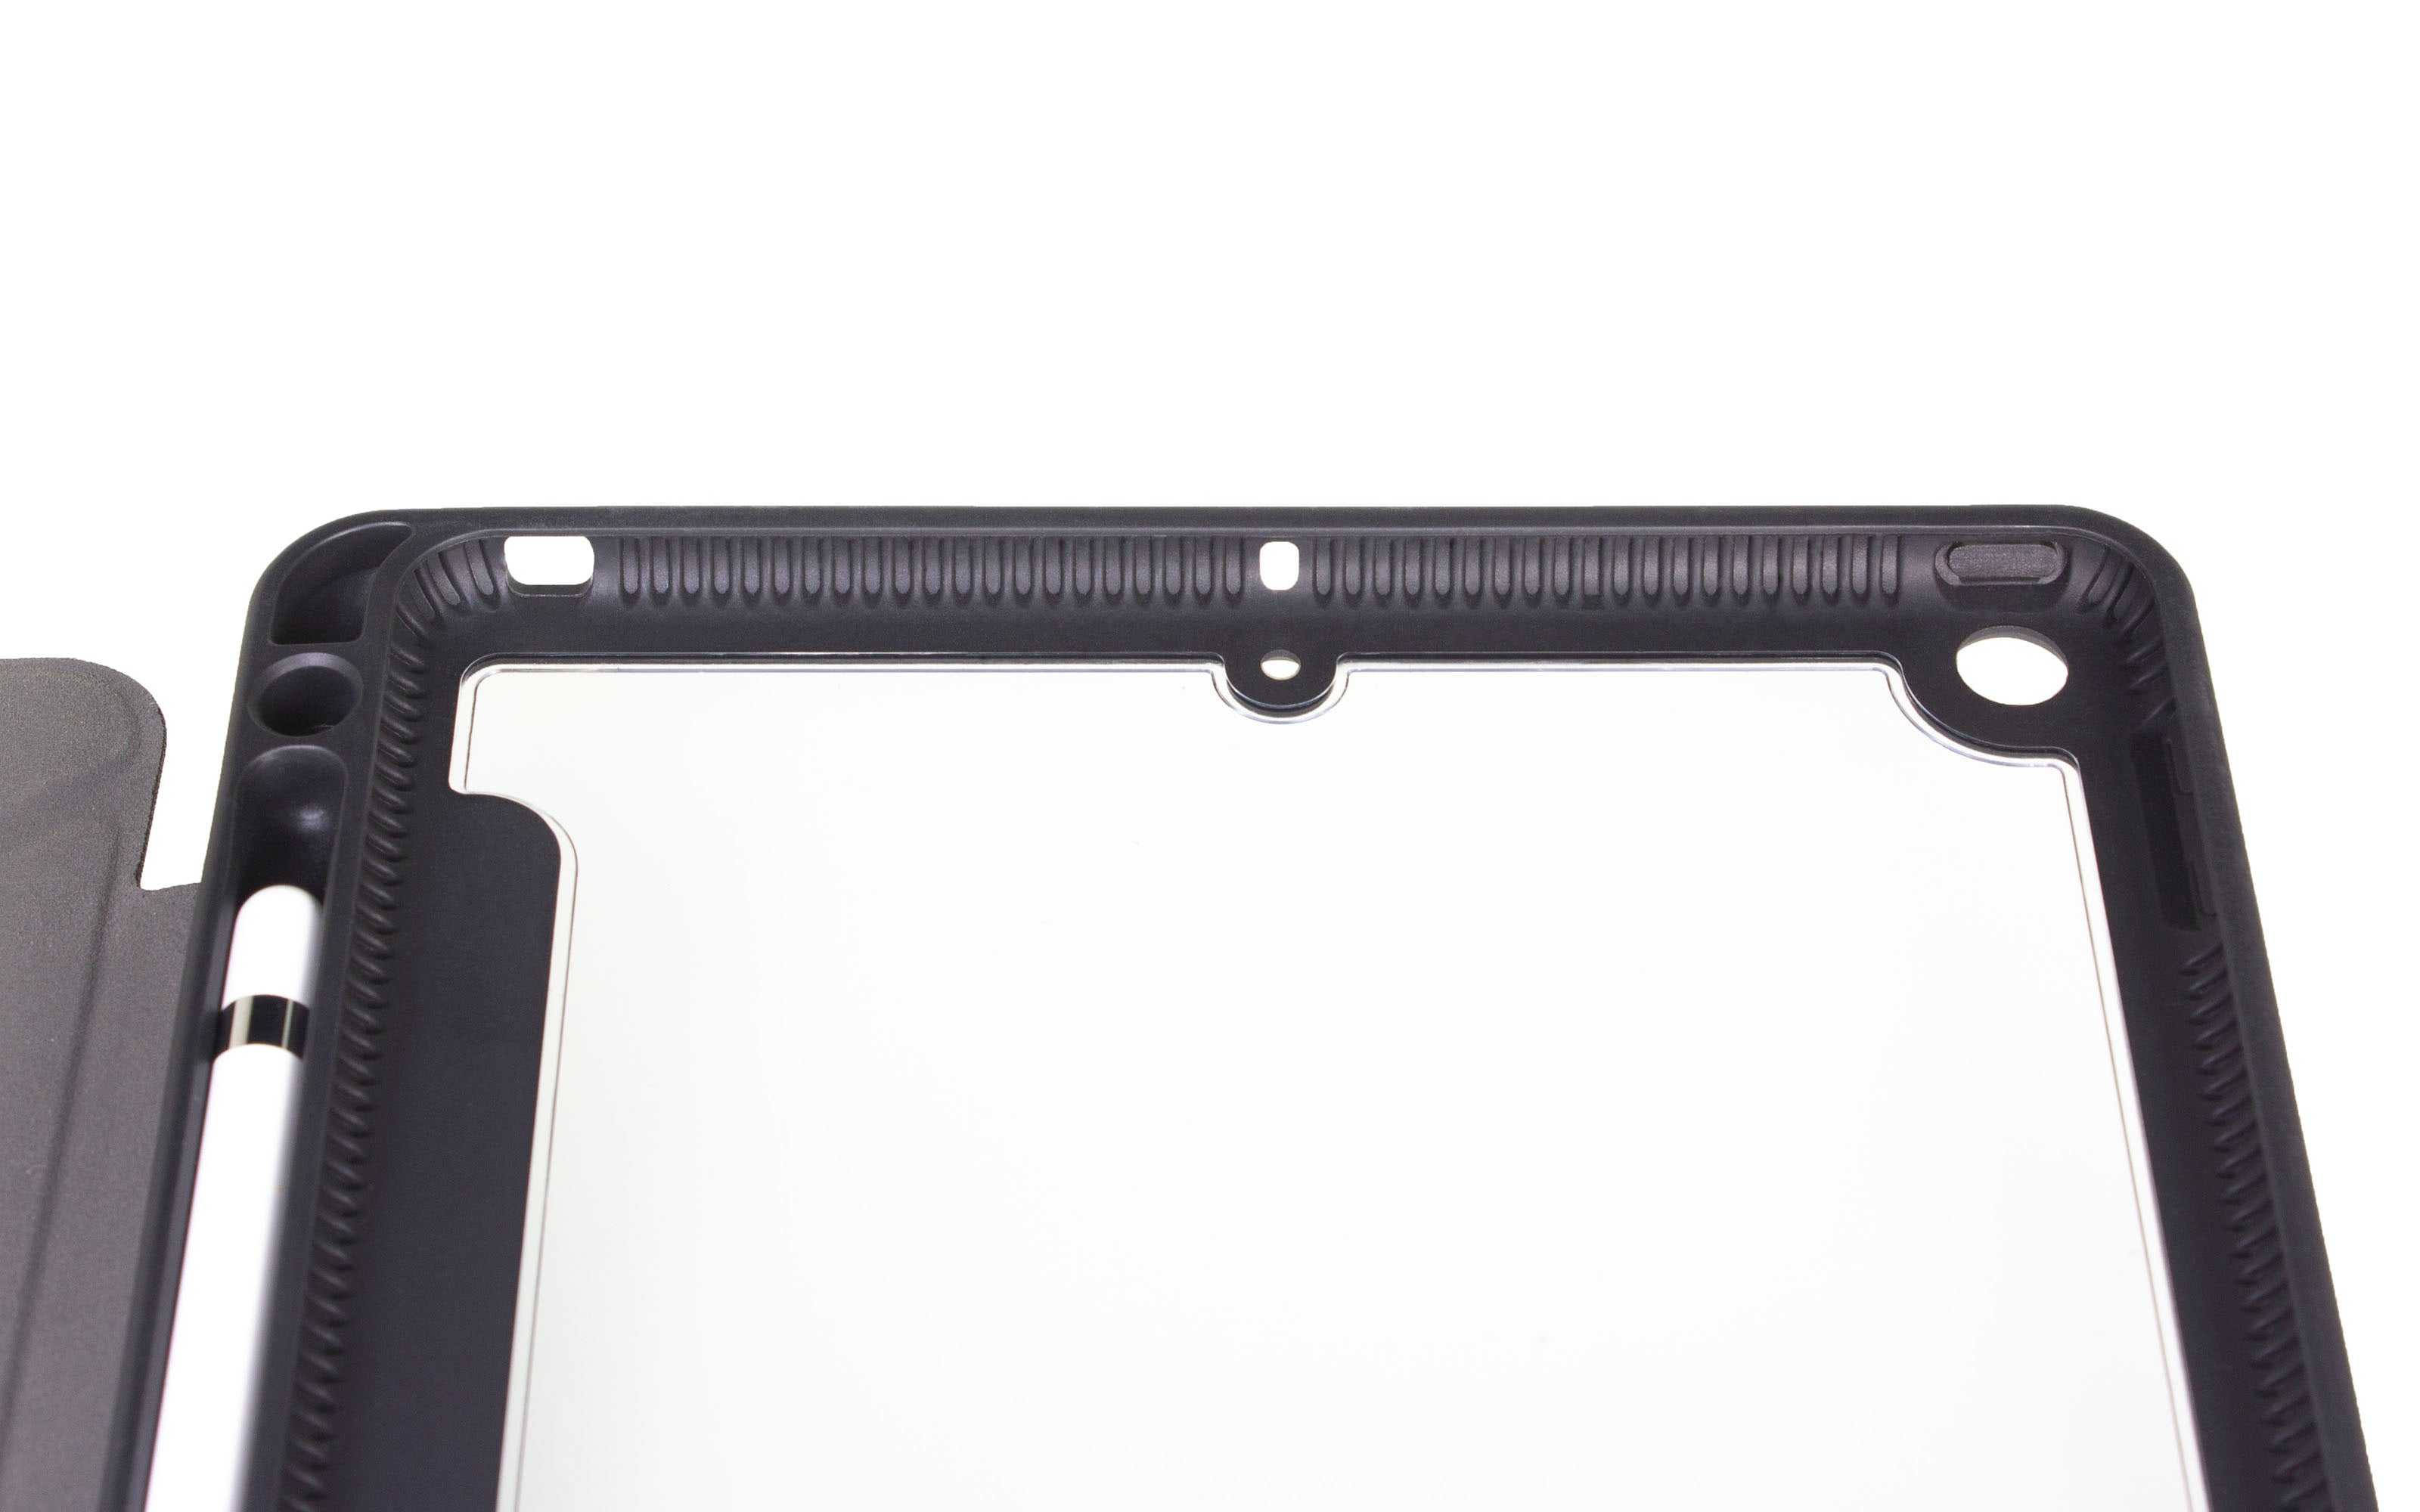 Torrii Torero Case With Pencil Slot For Apple iPad 10.2 (2019) - Dark Blue